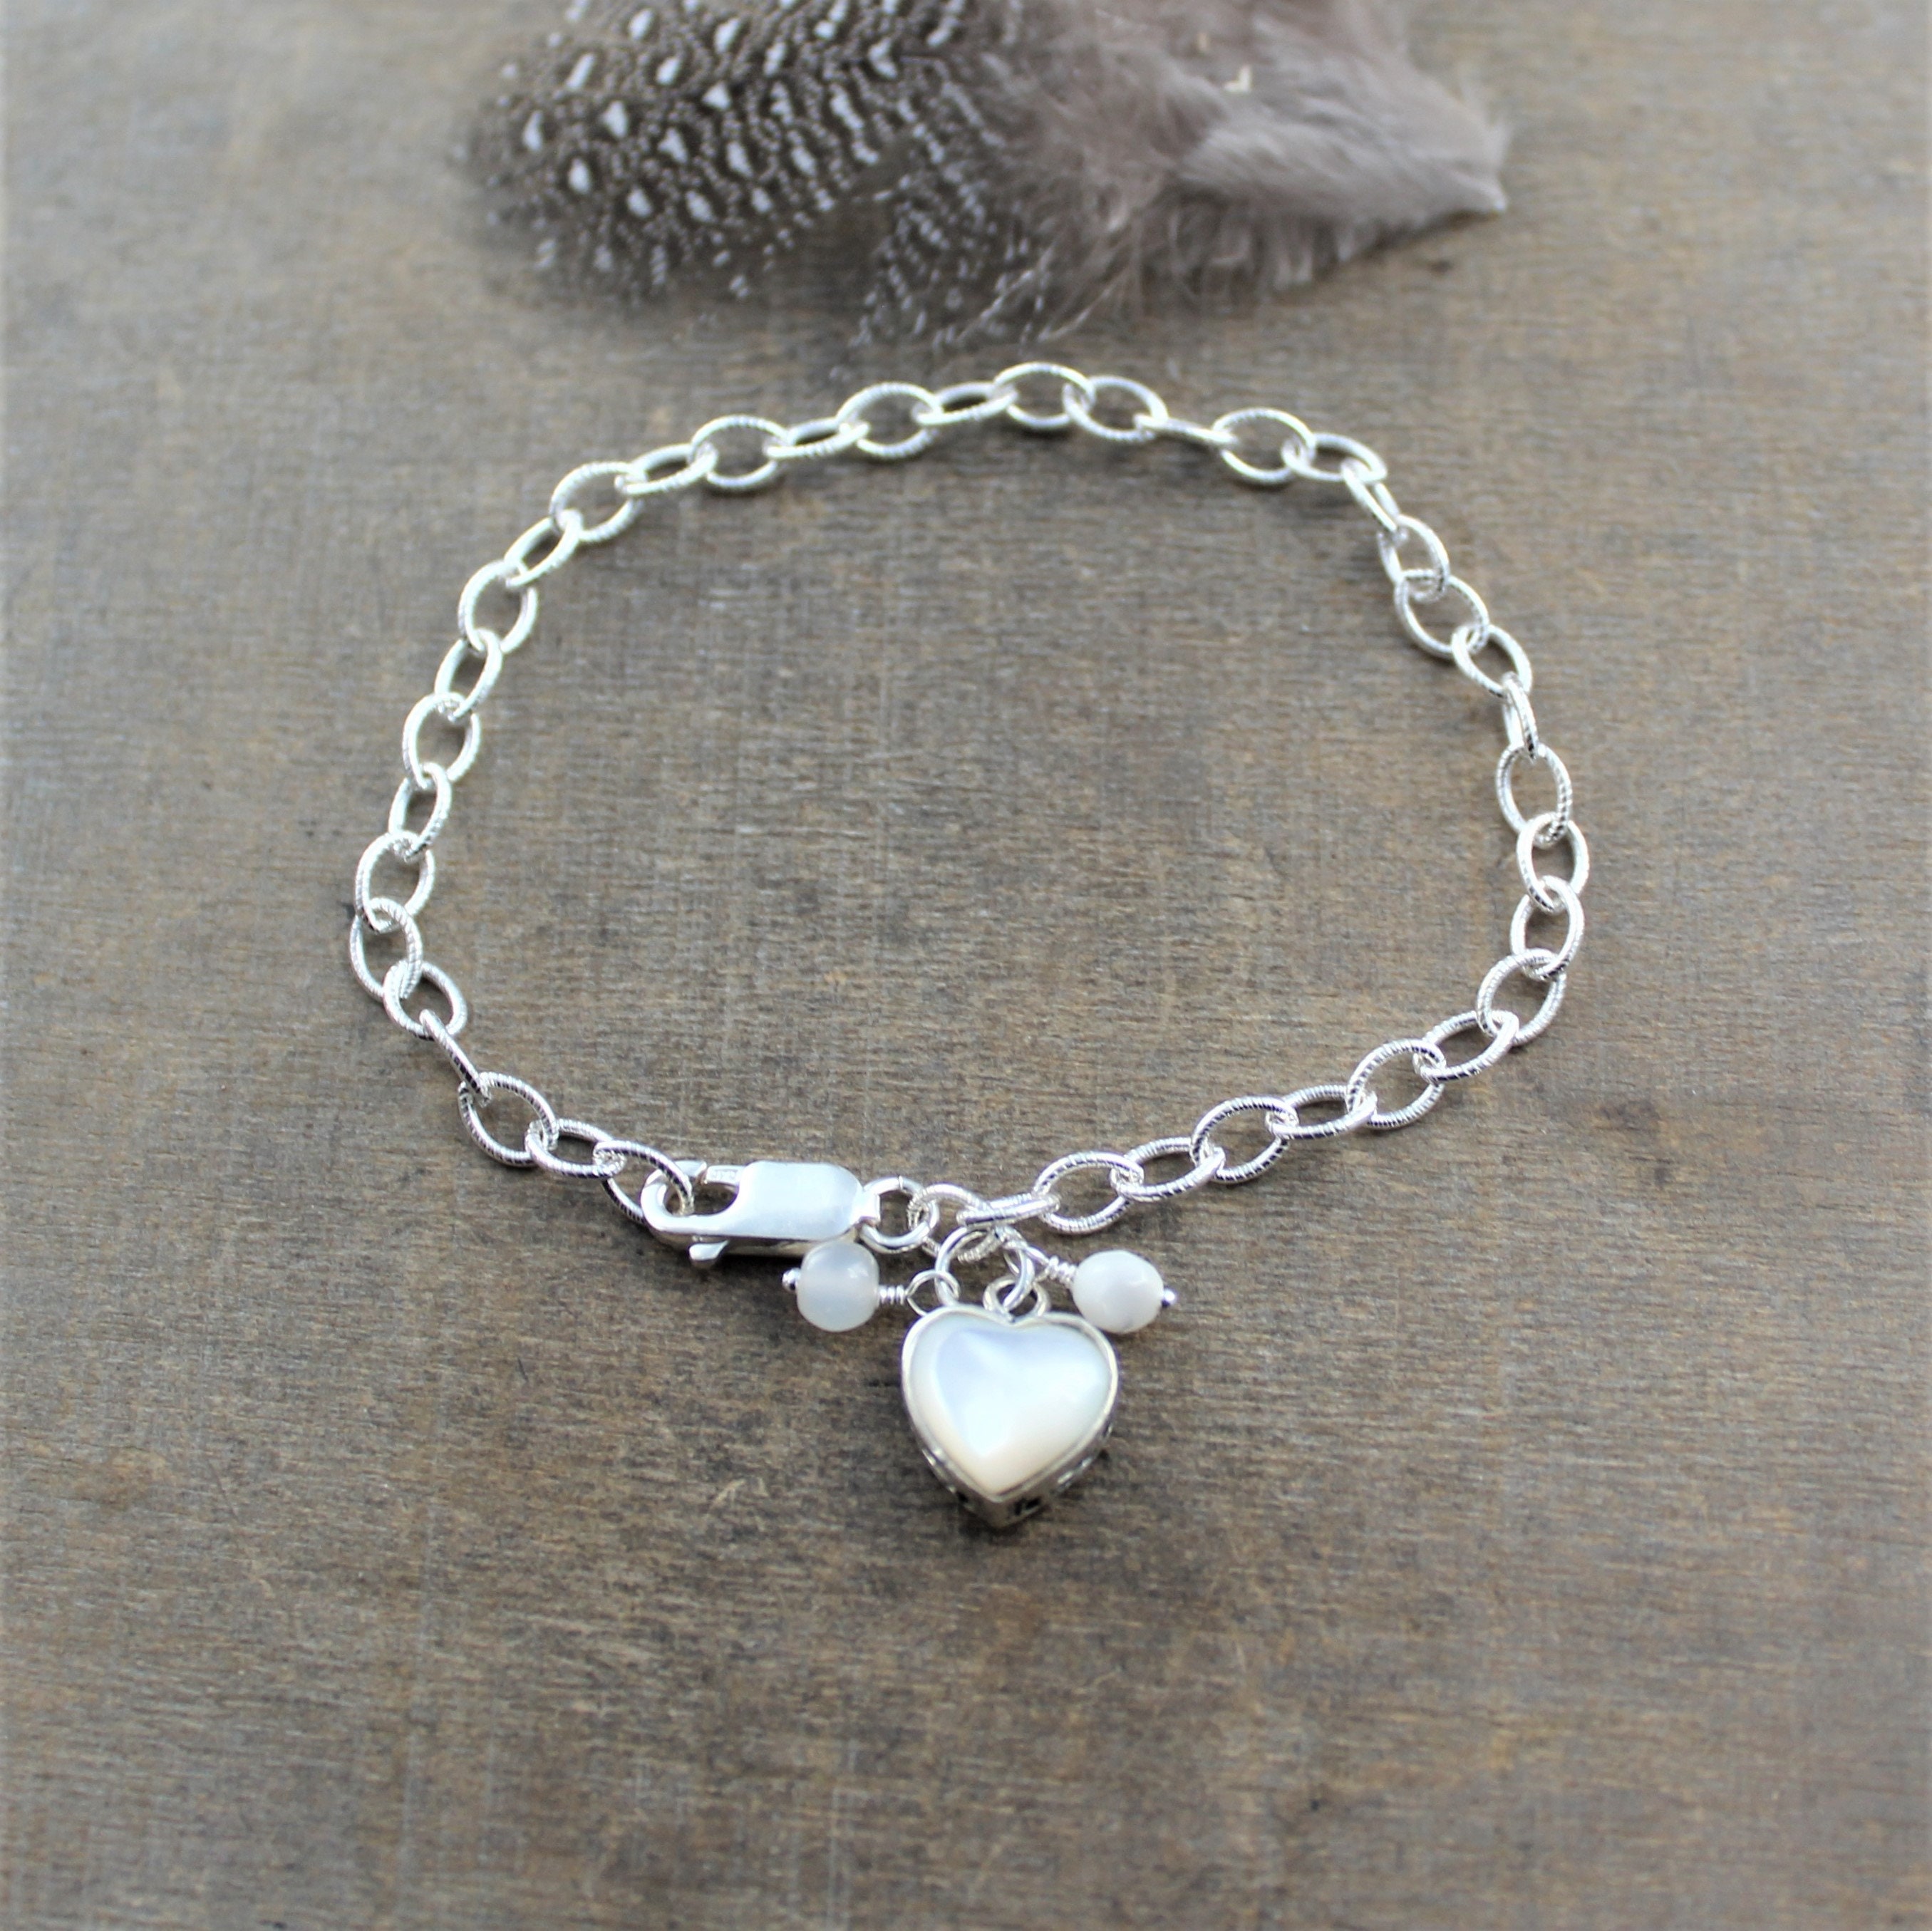 Personalized Silver Heart Bangle Bracelet